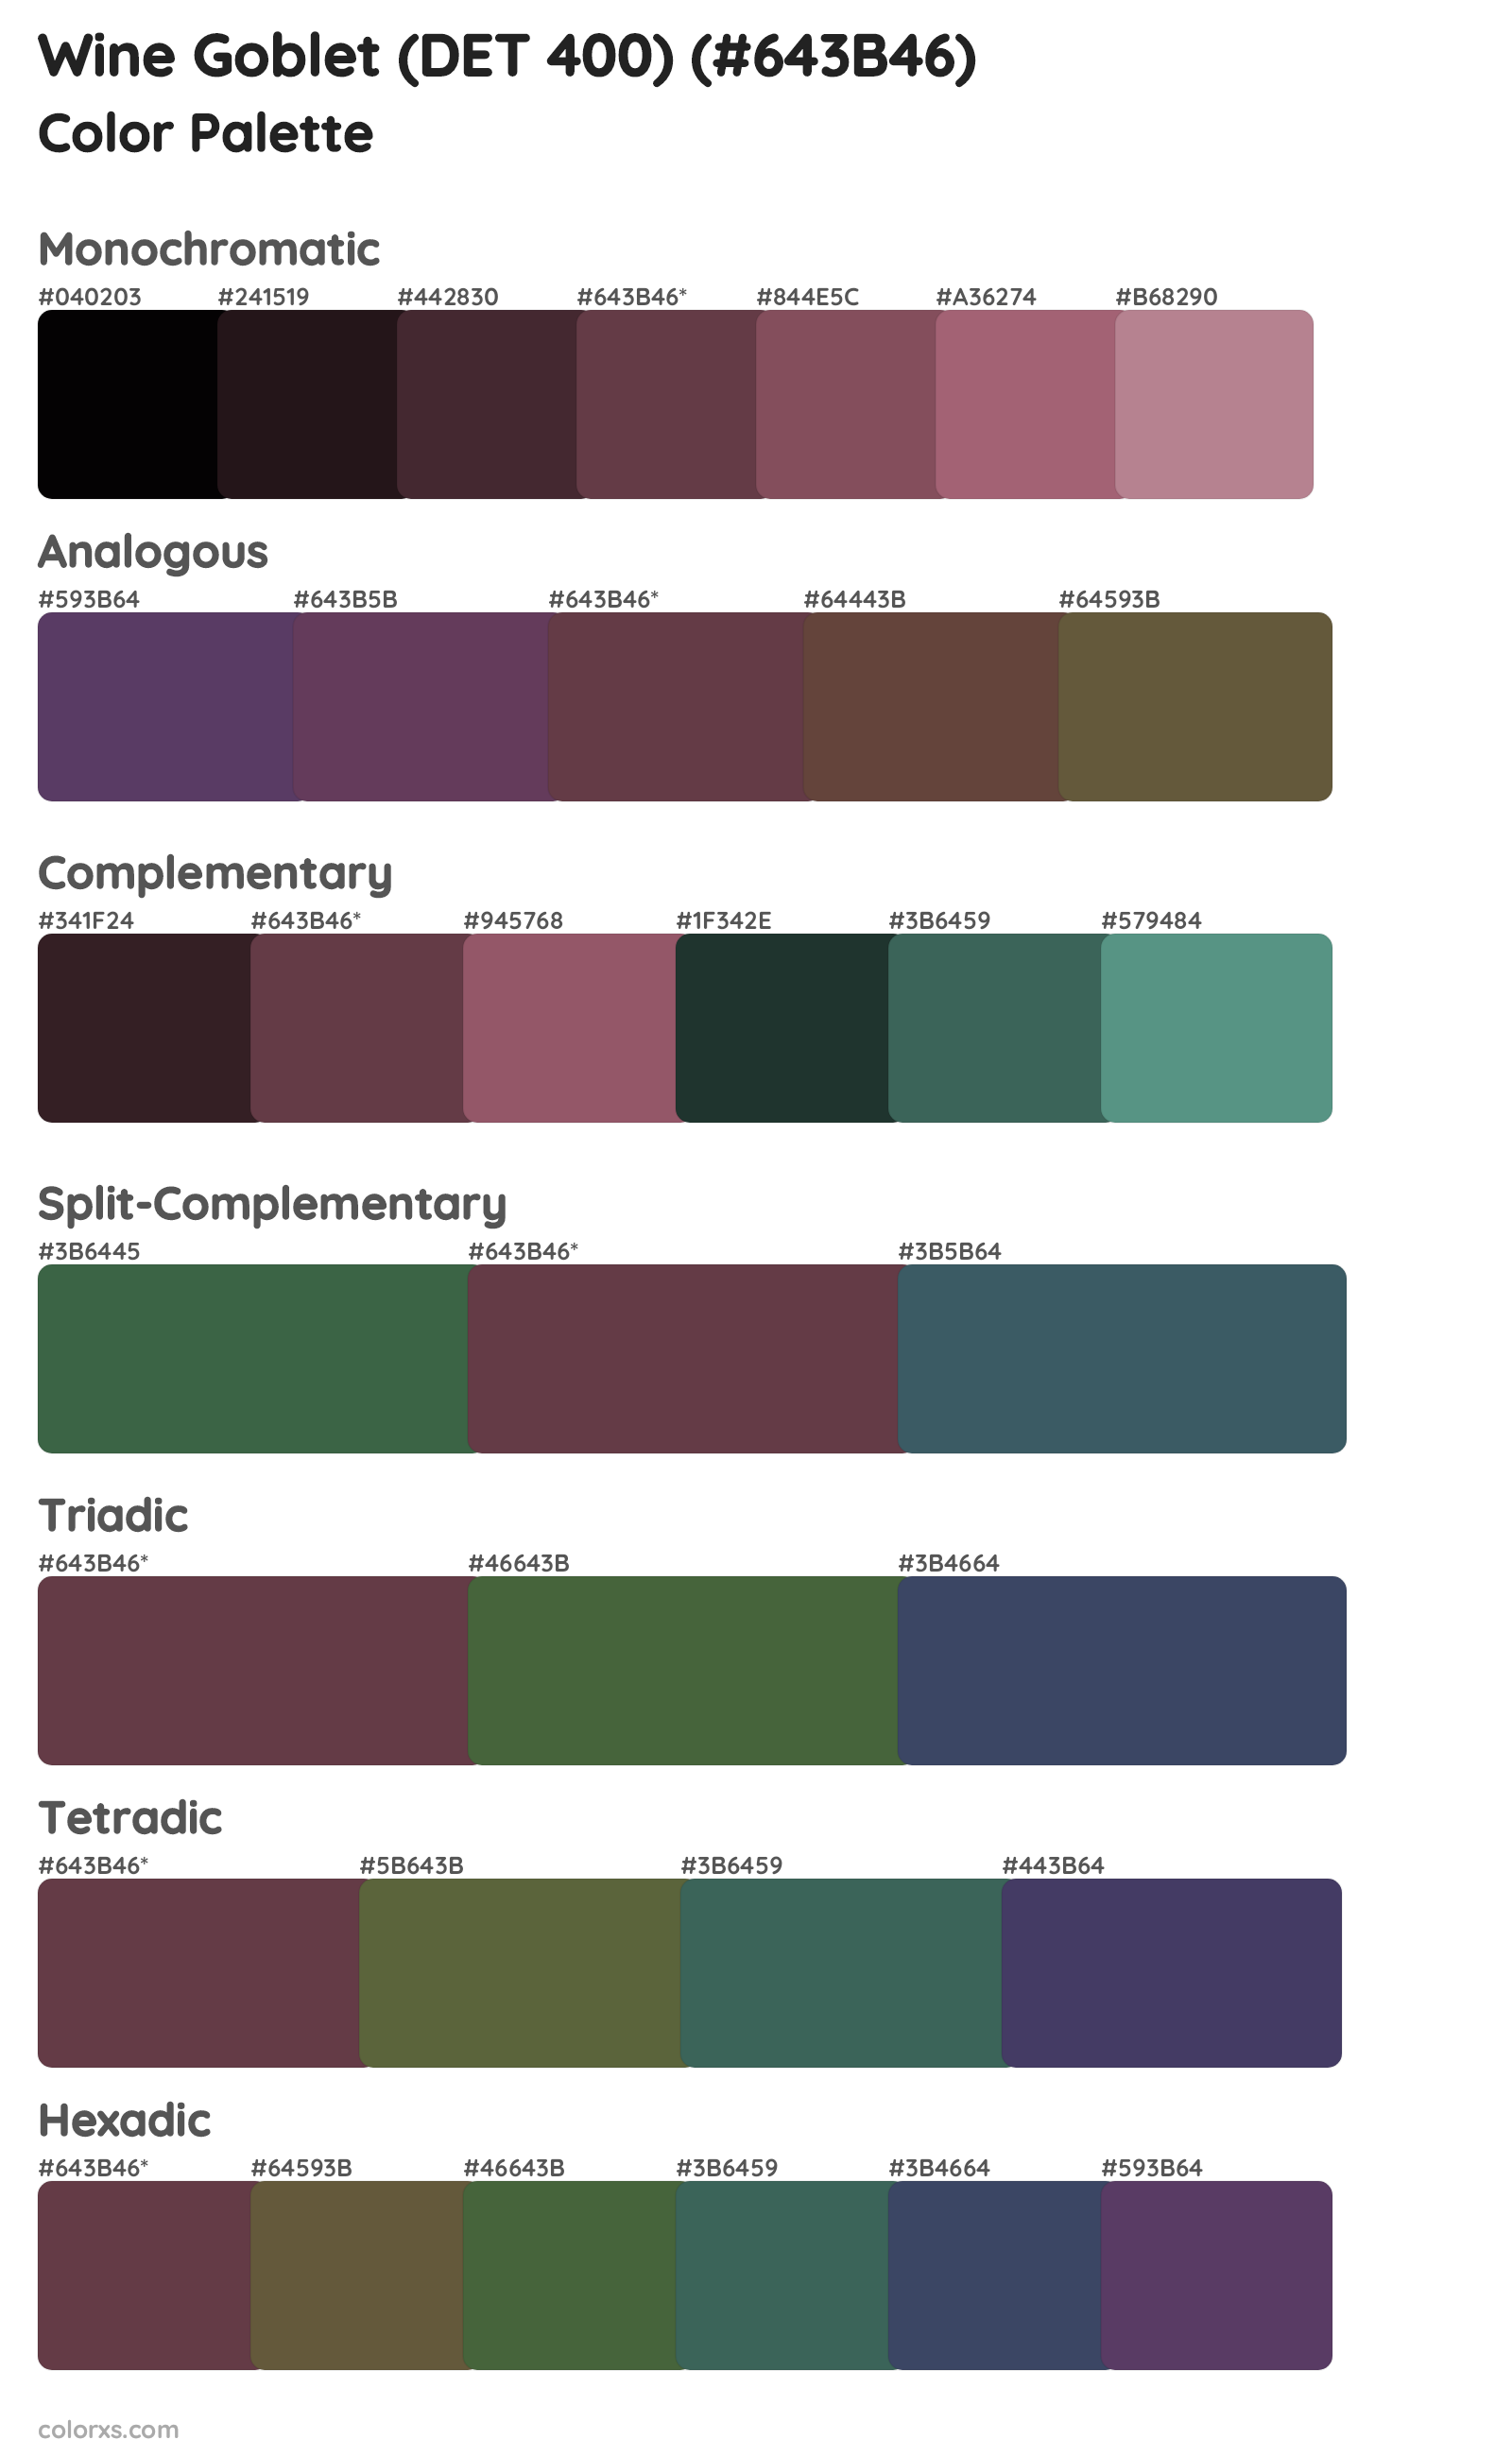 Wine Goblet (DET 400) Color Scheme Palettes